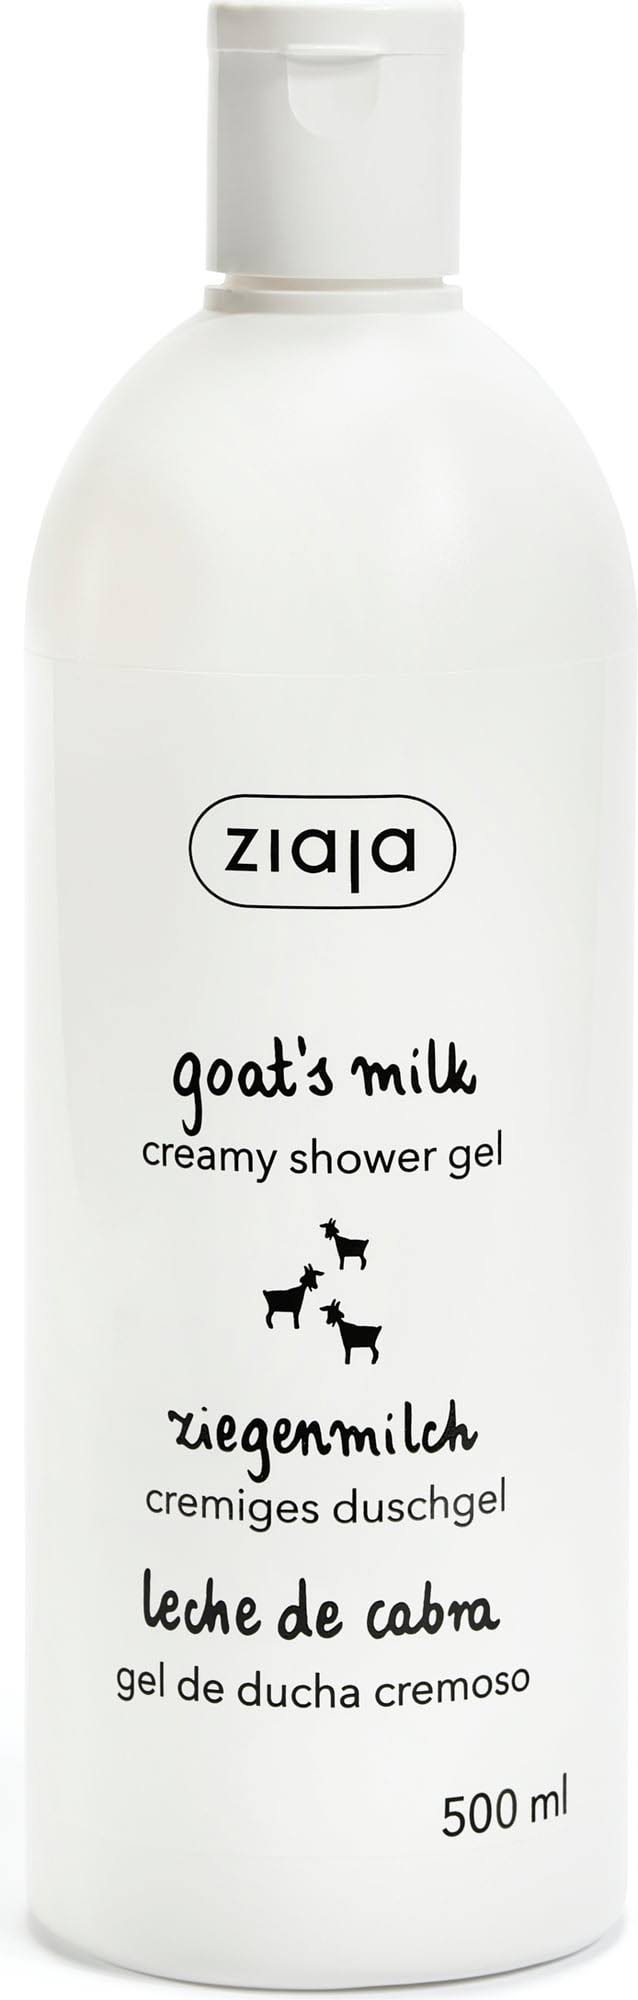 Ziaja Goat's Milk Creamy Shower Soap - 500ml